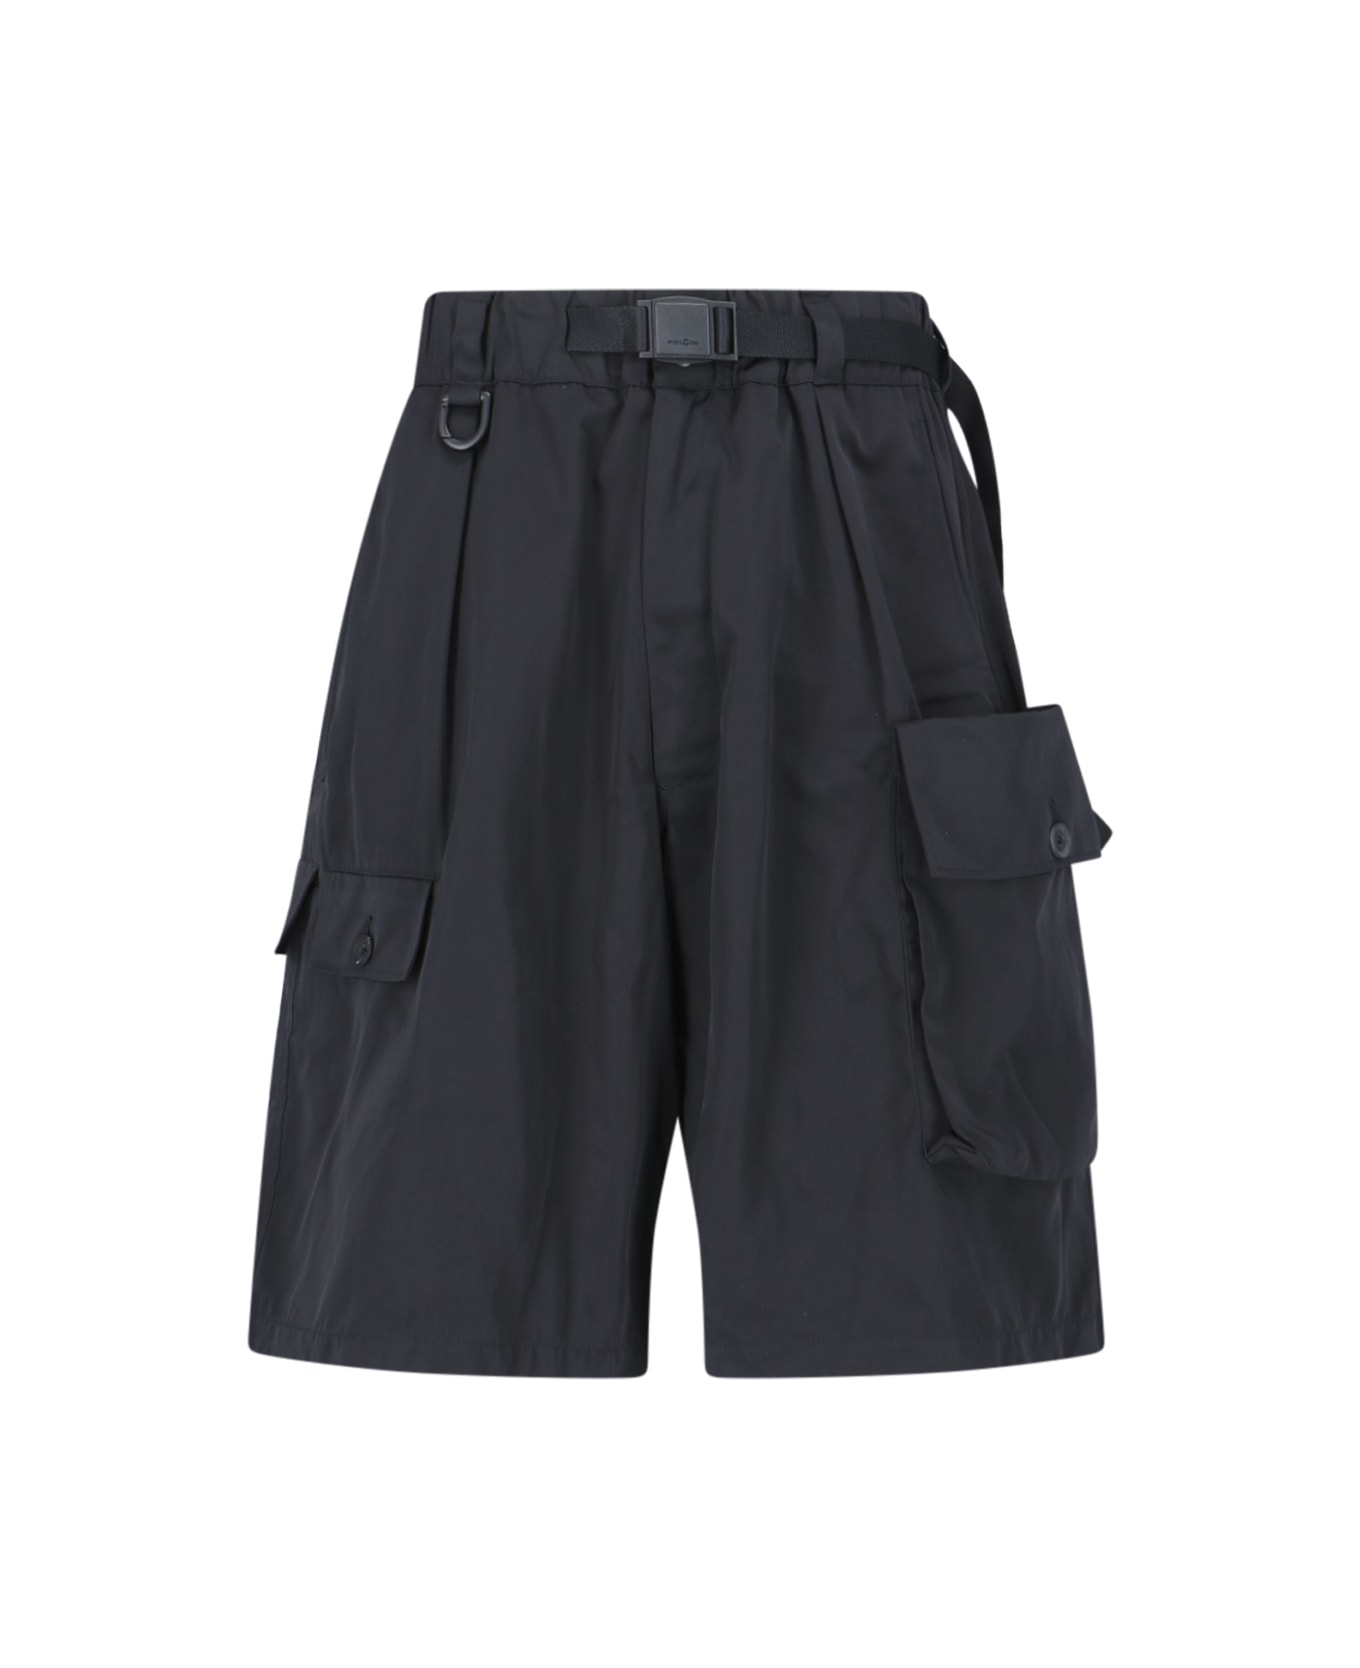 Y-3 Cargo Shorts - Black   ショートパンツ